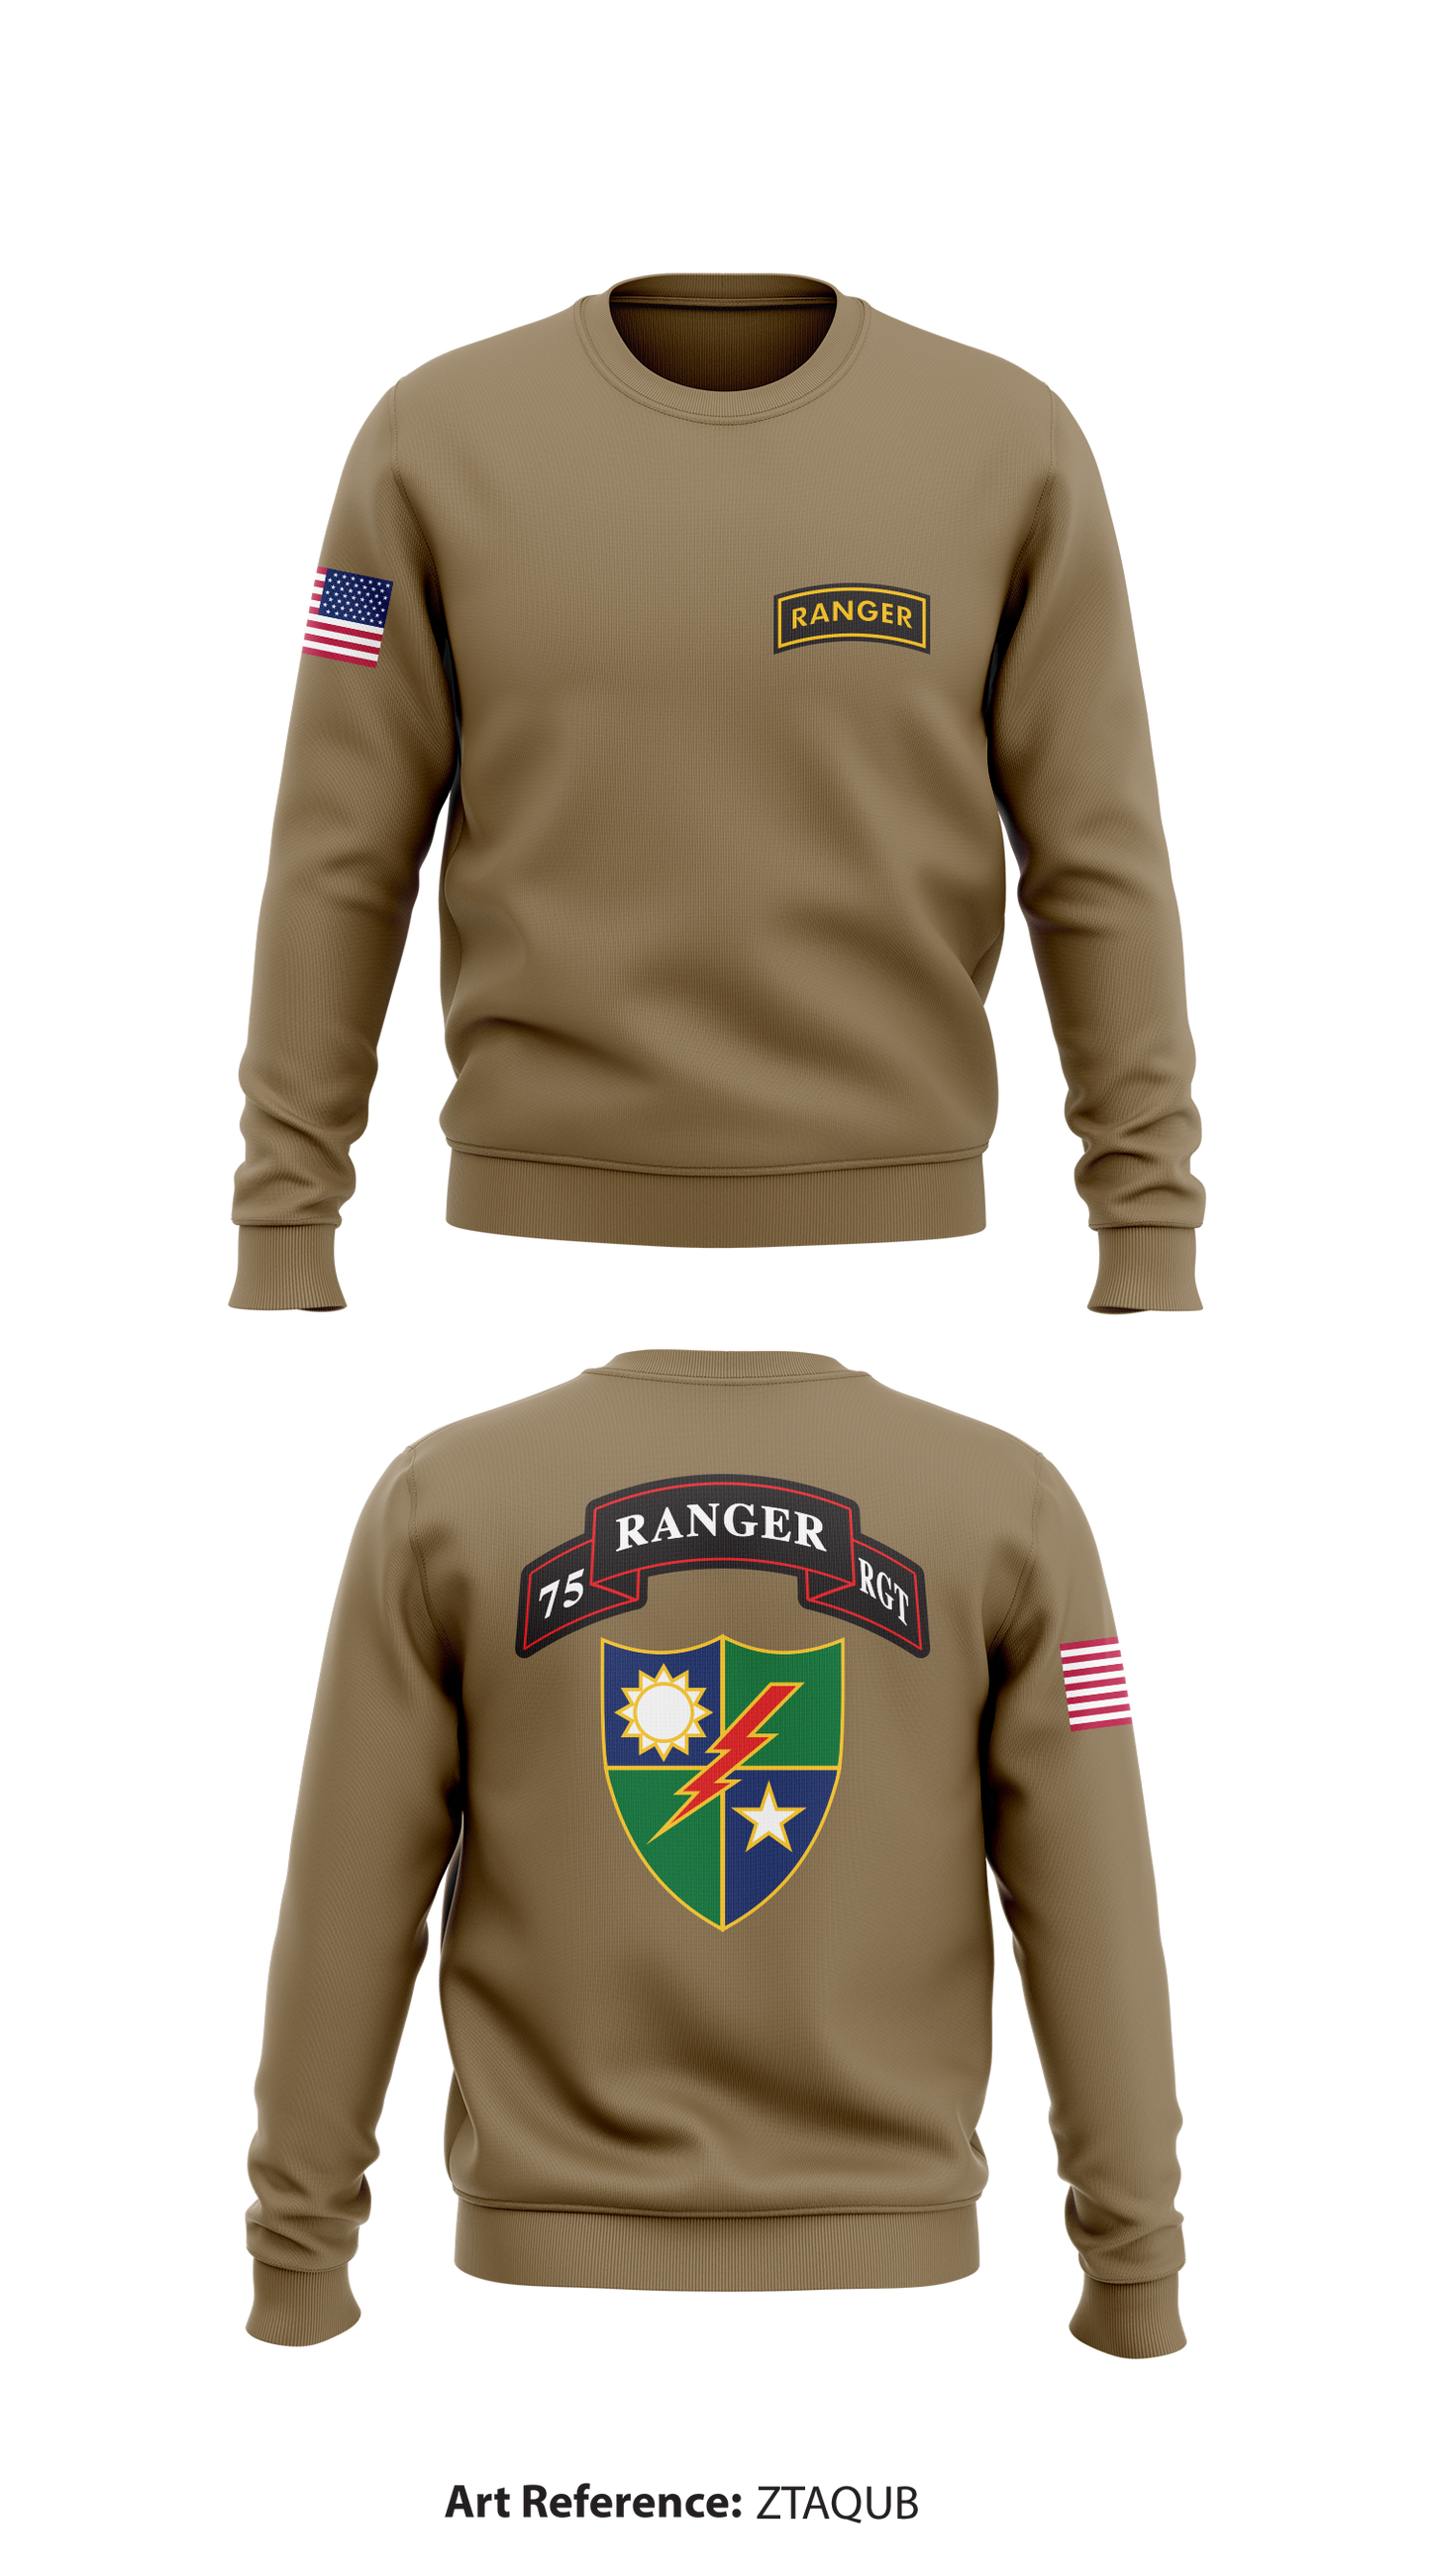 75 Ranger Regiment Store 1 Core Men's Crewneck Performance Sweatshirt - zTaqub